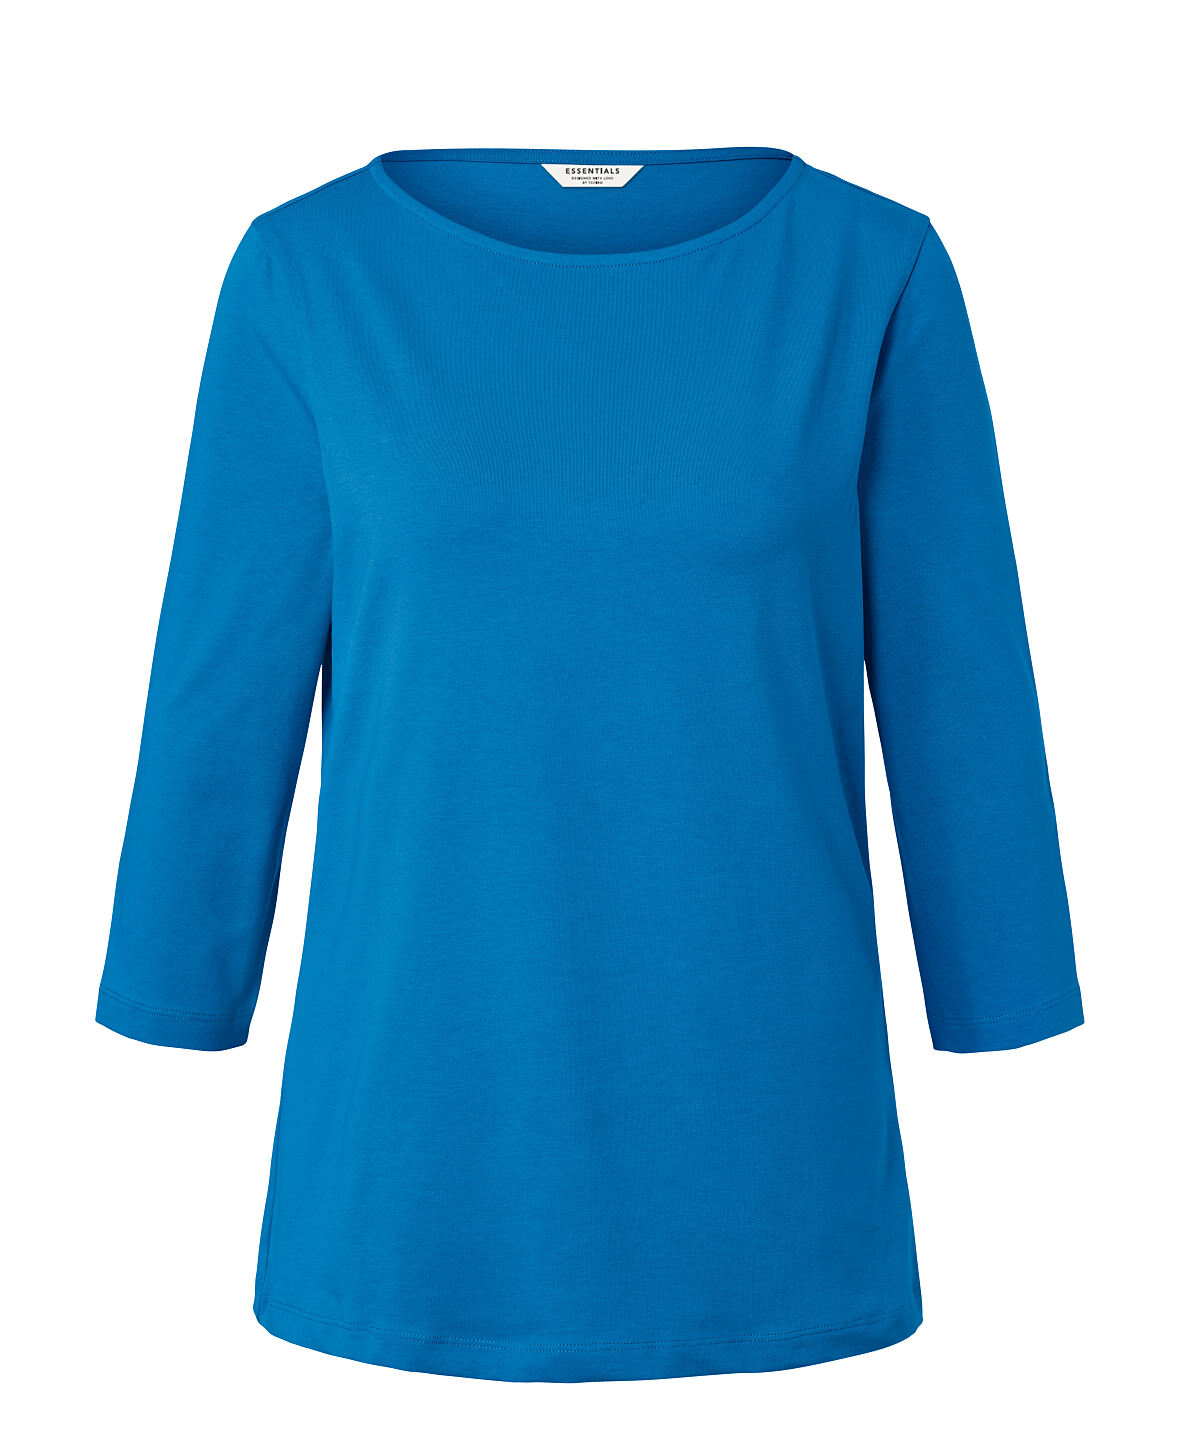 130755 Shirt Blau FS 1 08.24